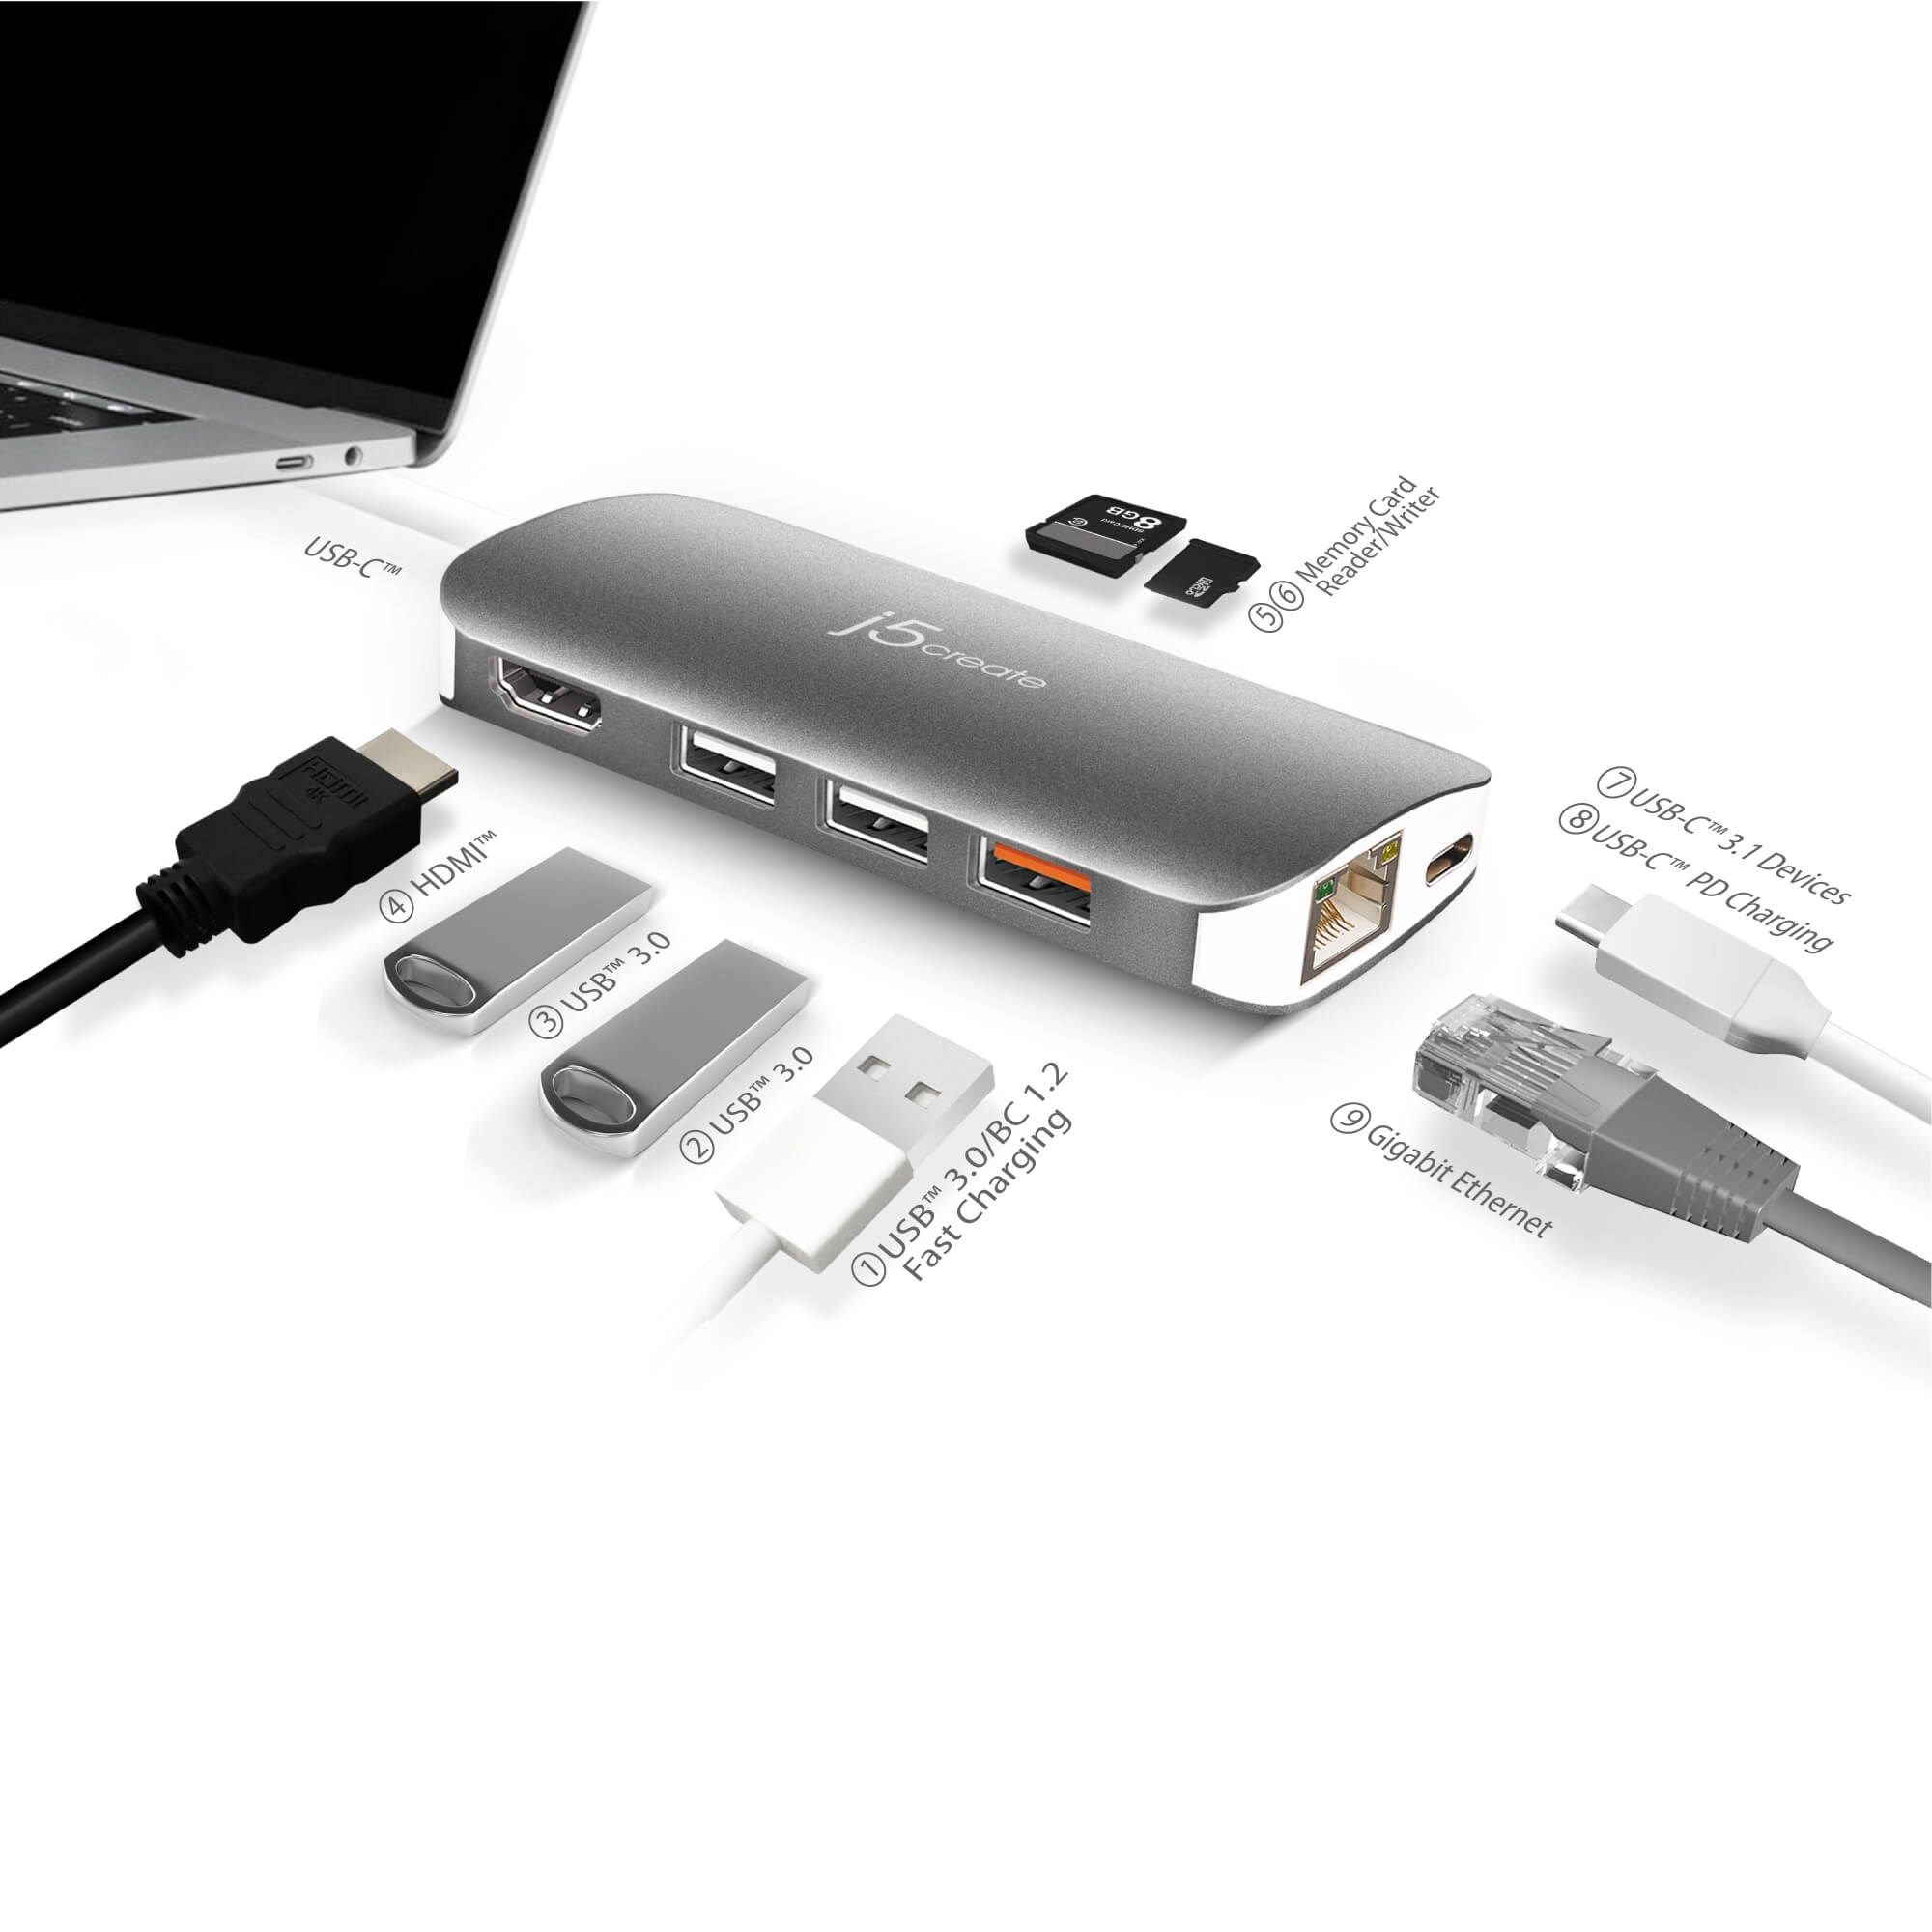 Customer Reviews: j5create 3-Port USB 3.0 Hub and HDMI Adapter